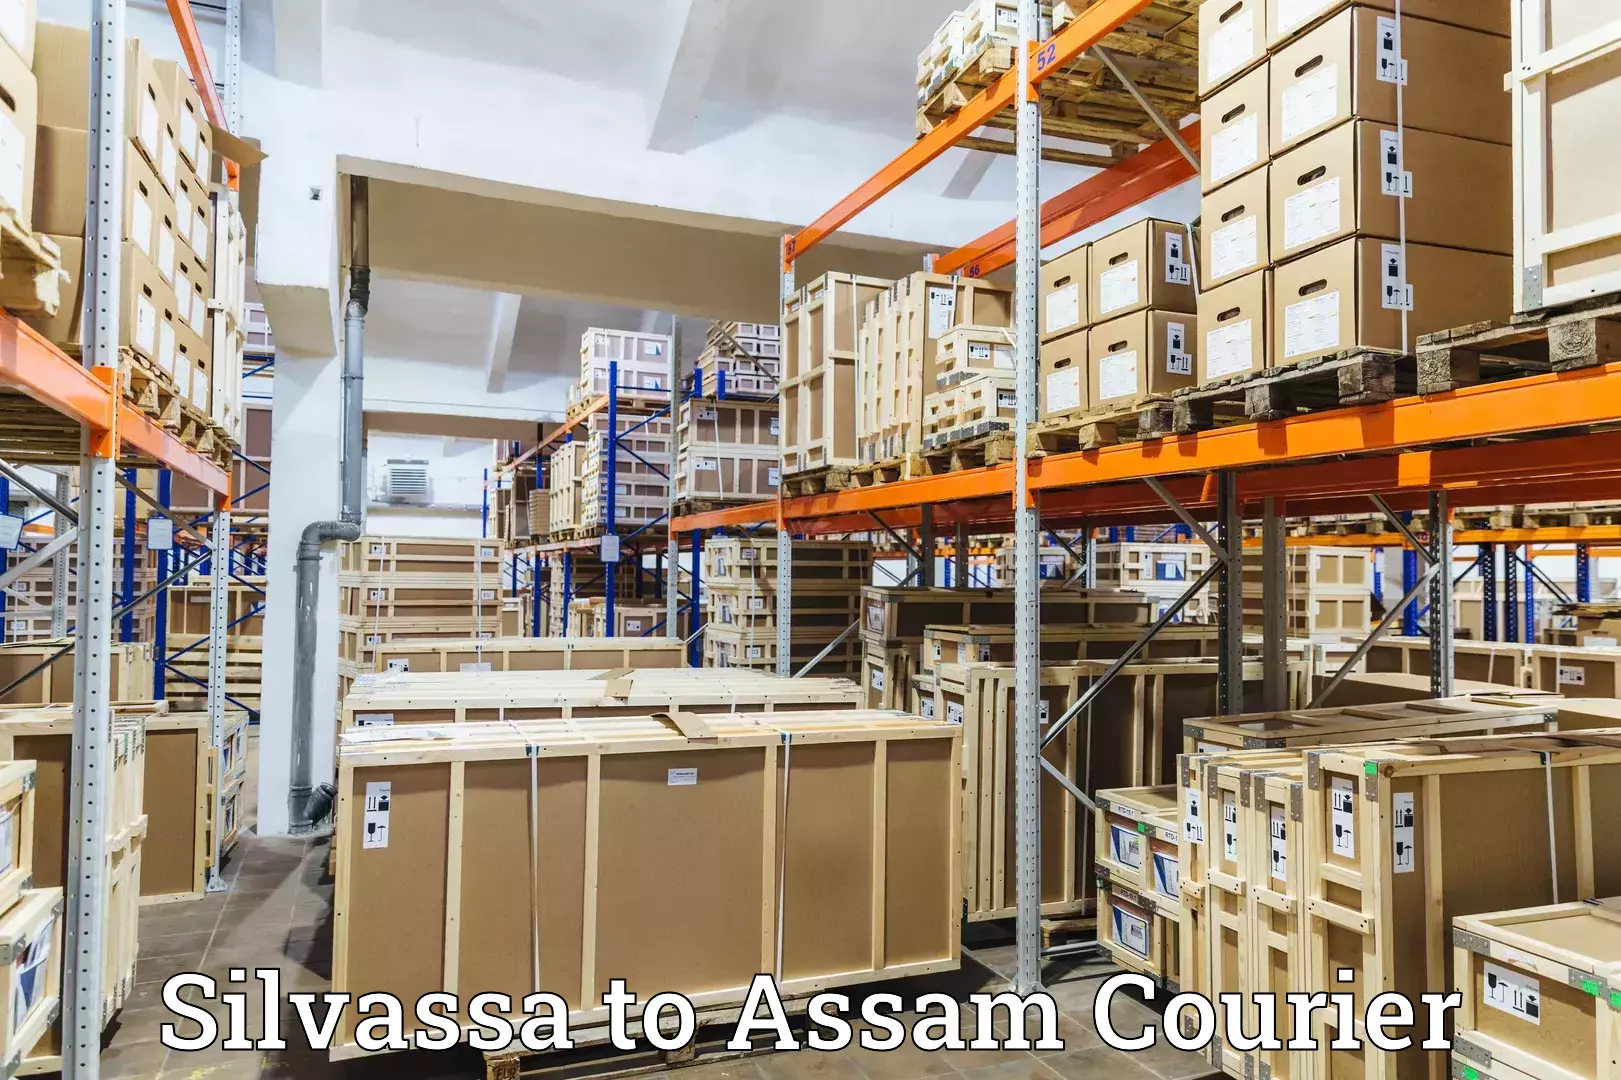 Courier service partnerships Silvassa to Assam